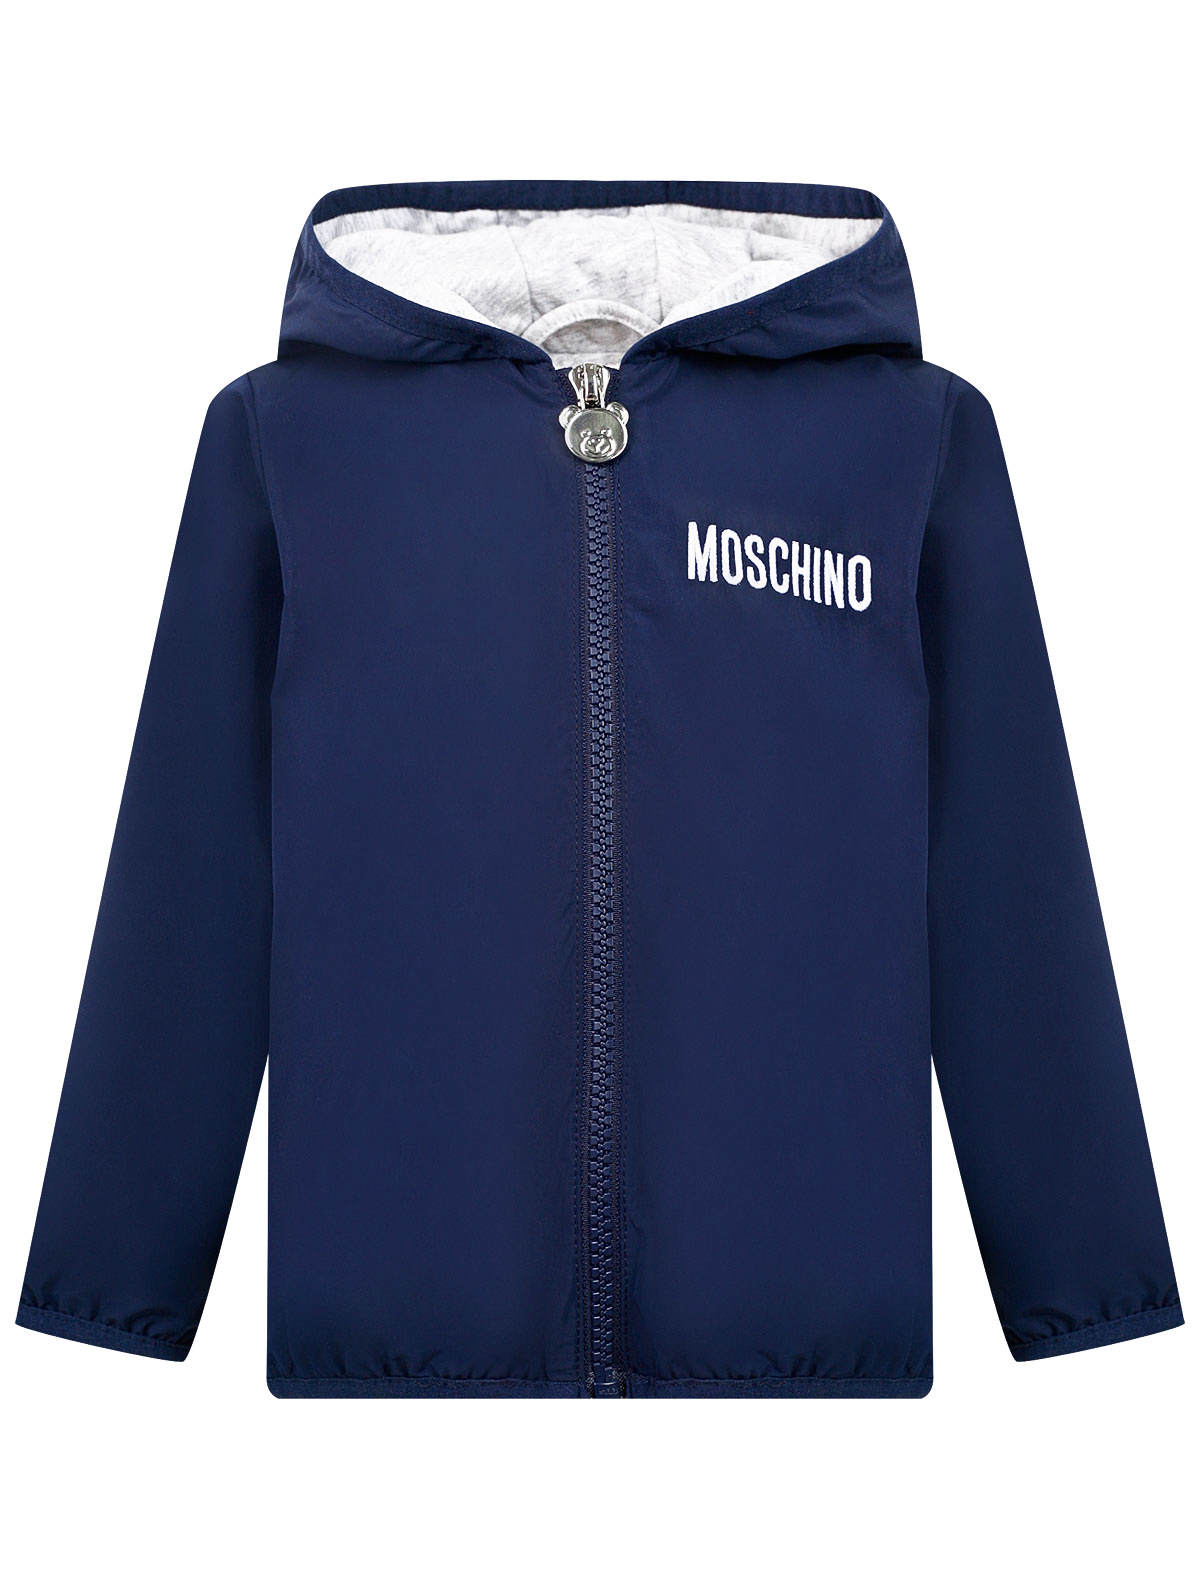 Куртка Moschino 2396213, цвет синий, размер 3 1074529270298 - фото 1